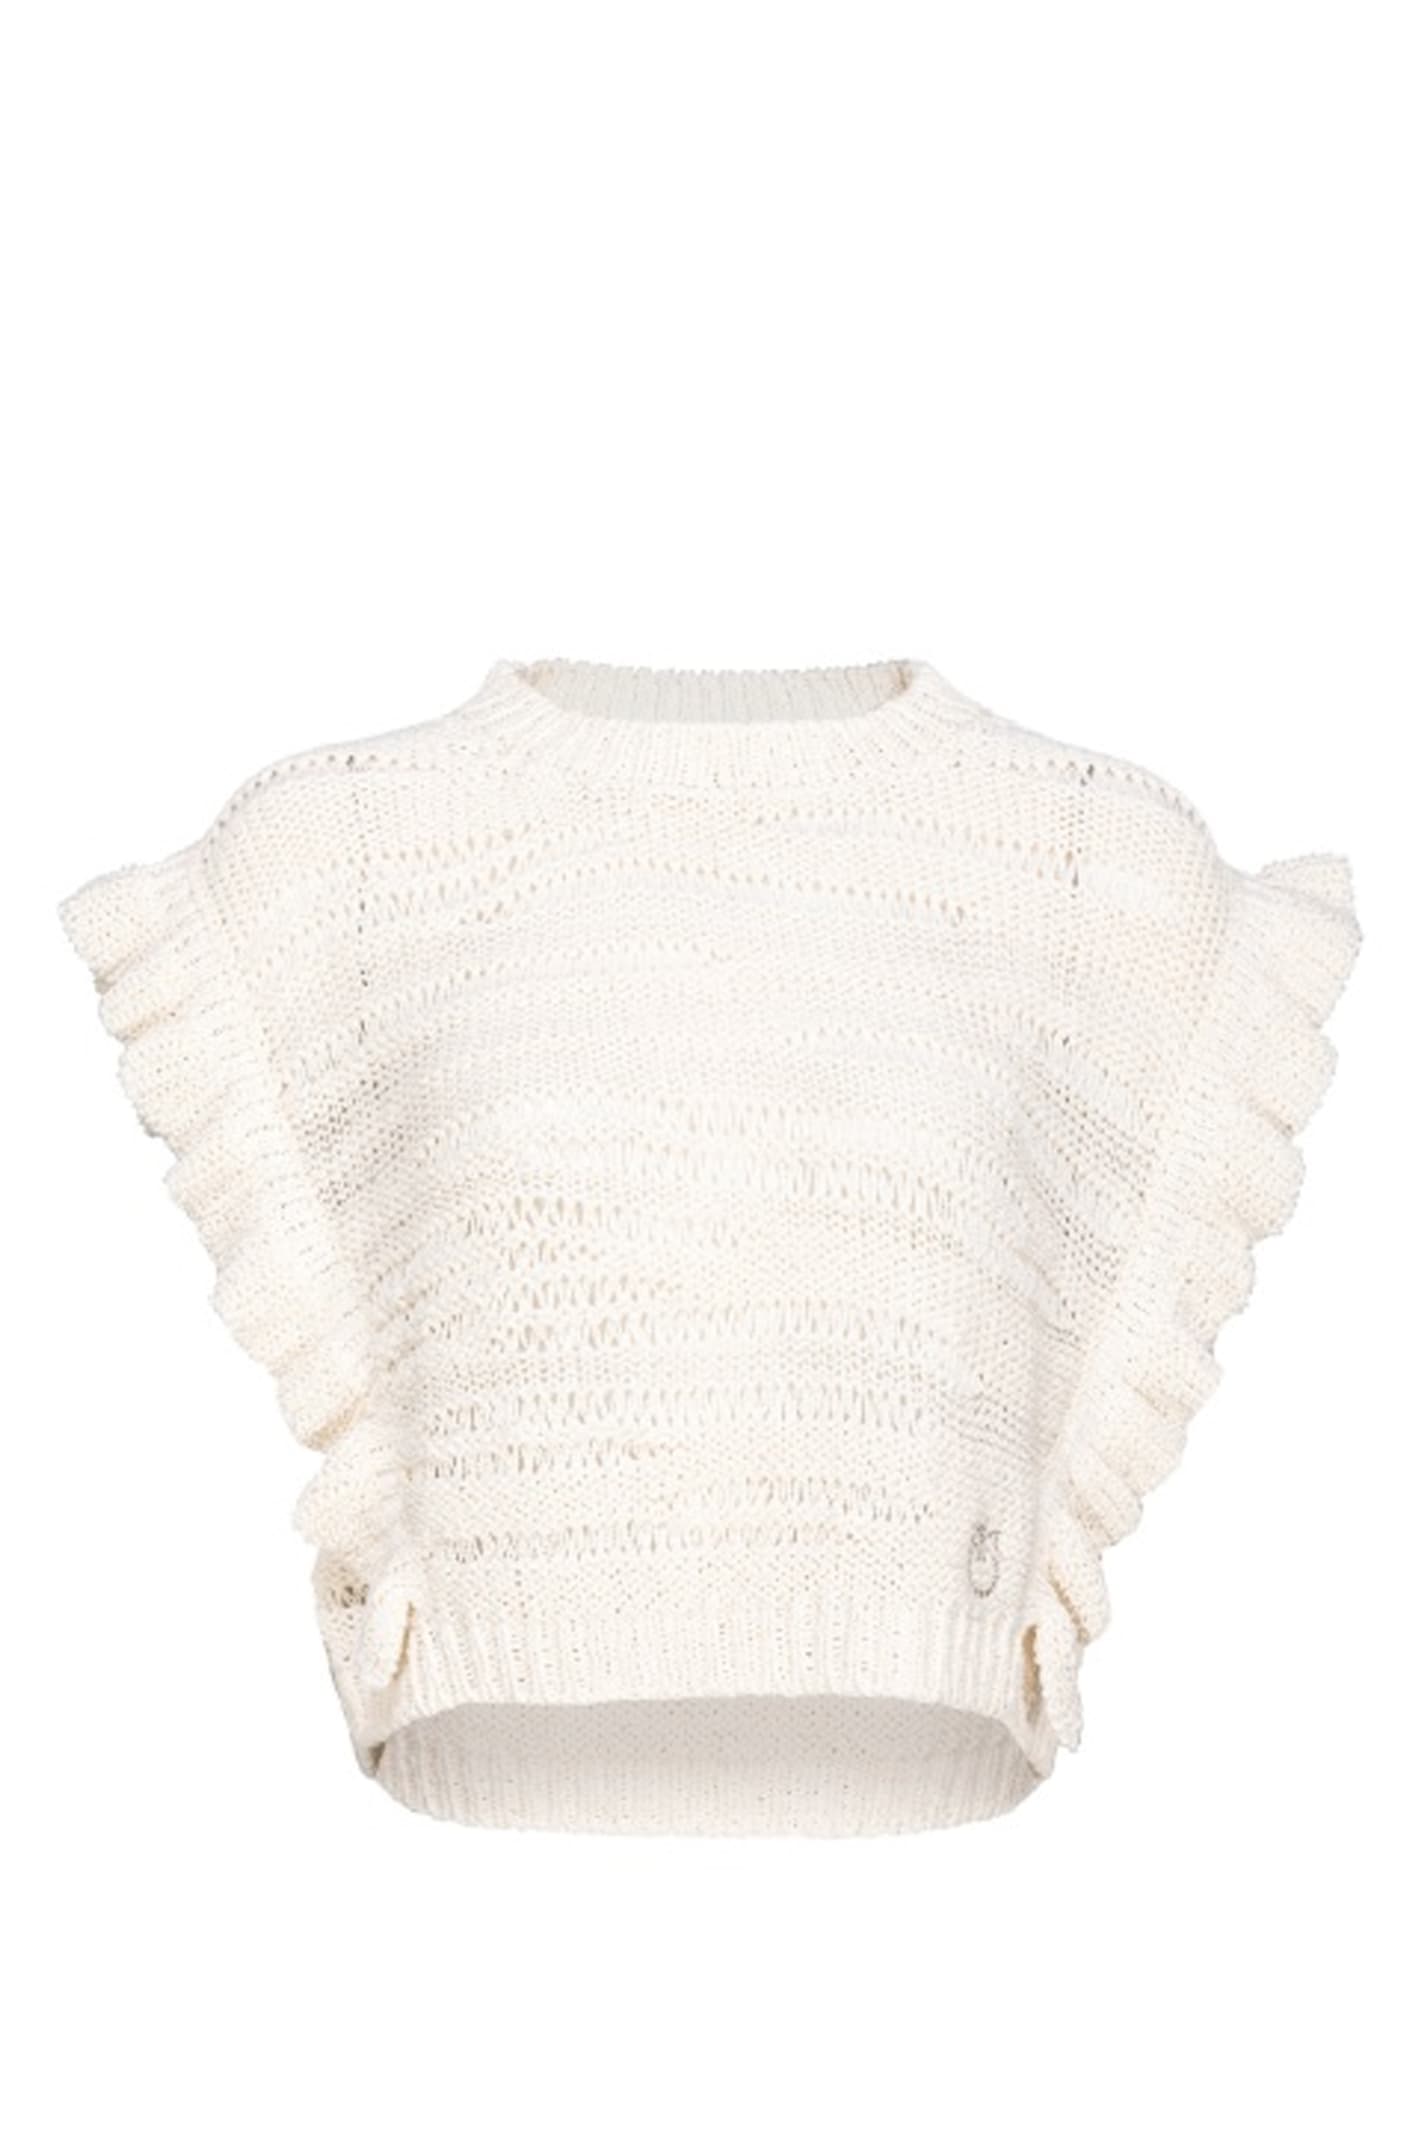 Pinko Sweater In Ivory